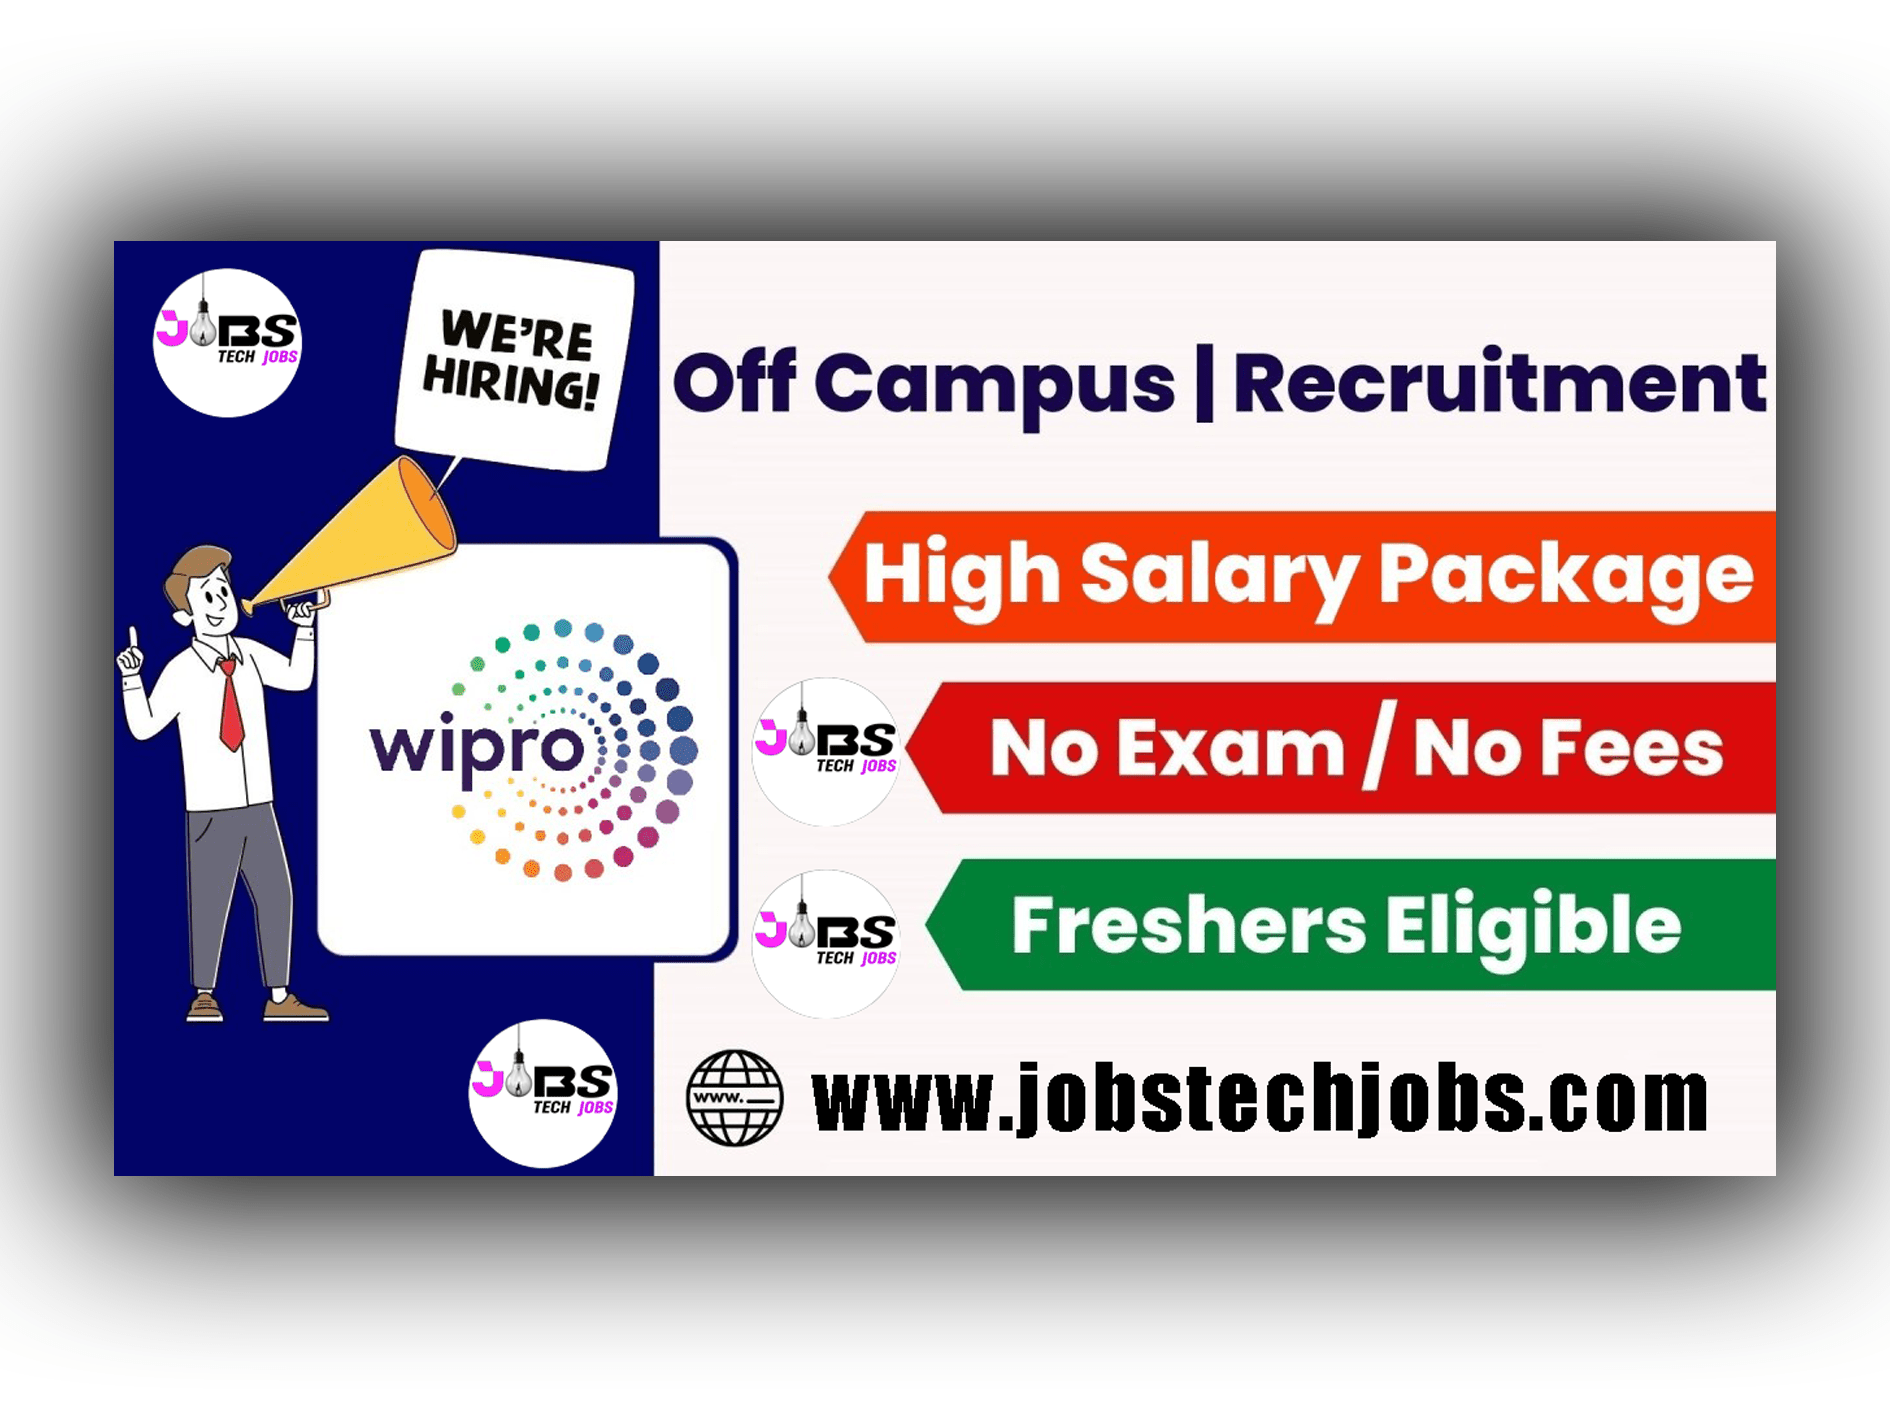 wipro is hiring jobs at wipro